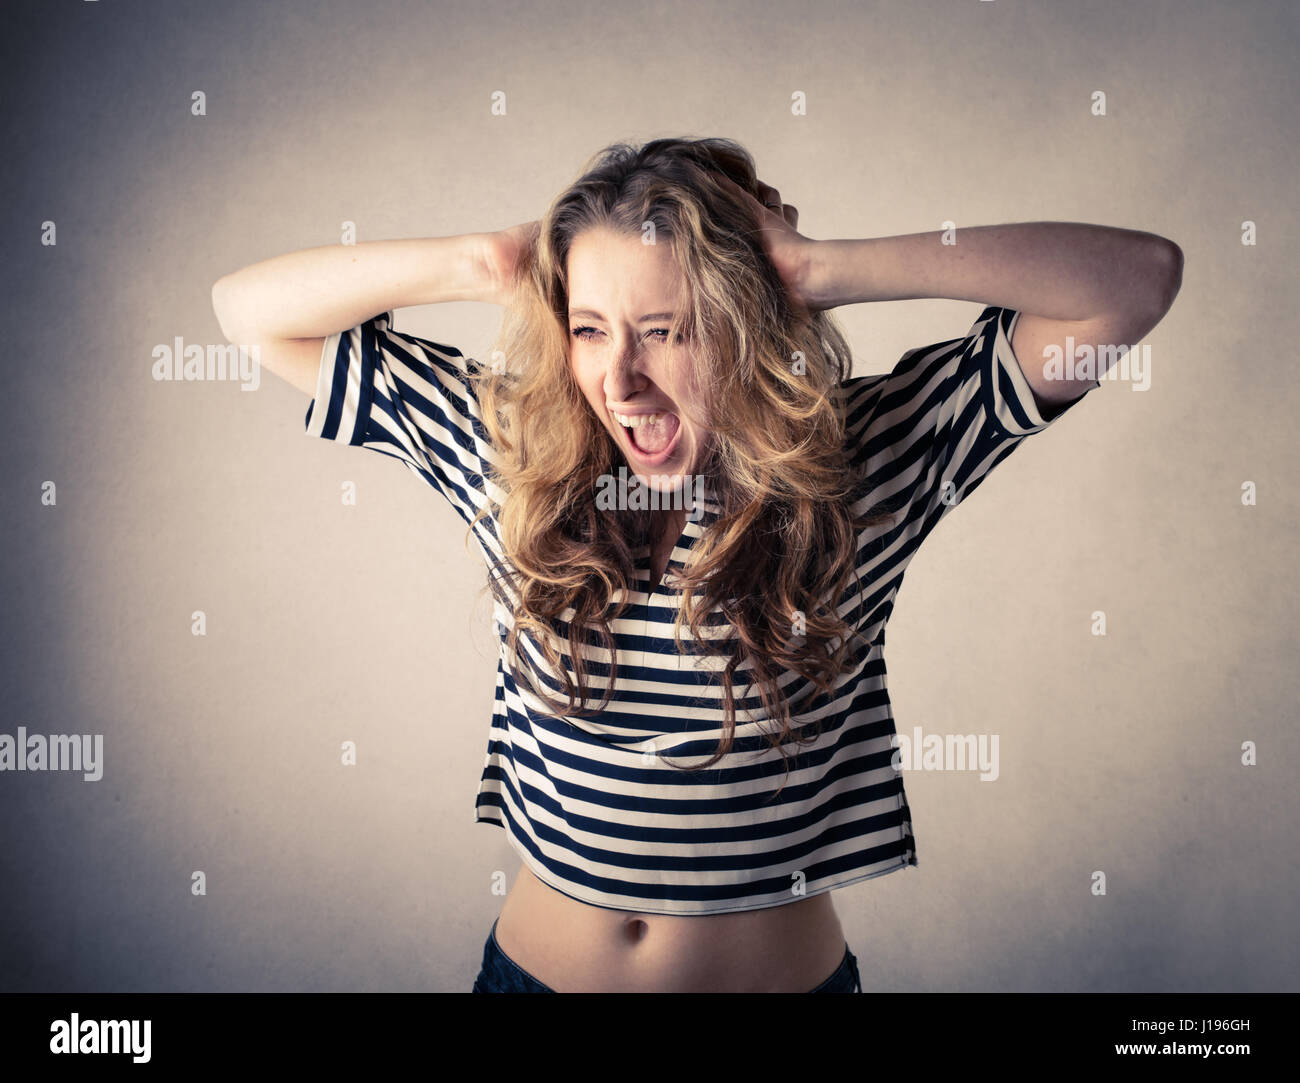 Blond woman shouting Stock Photo